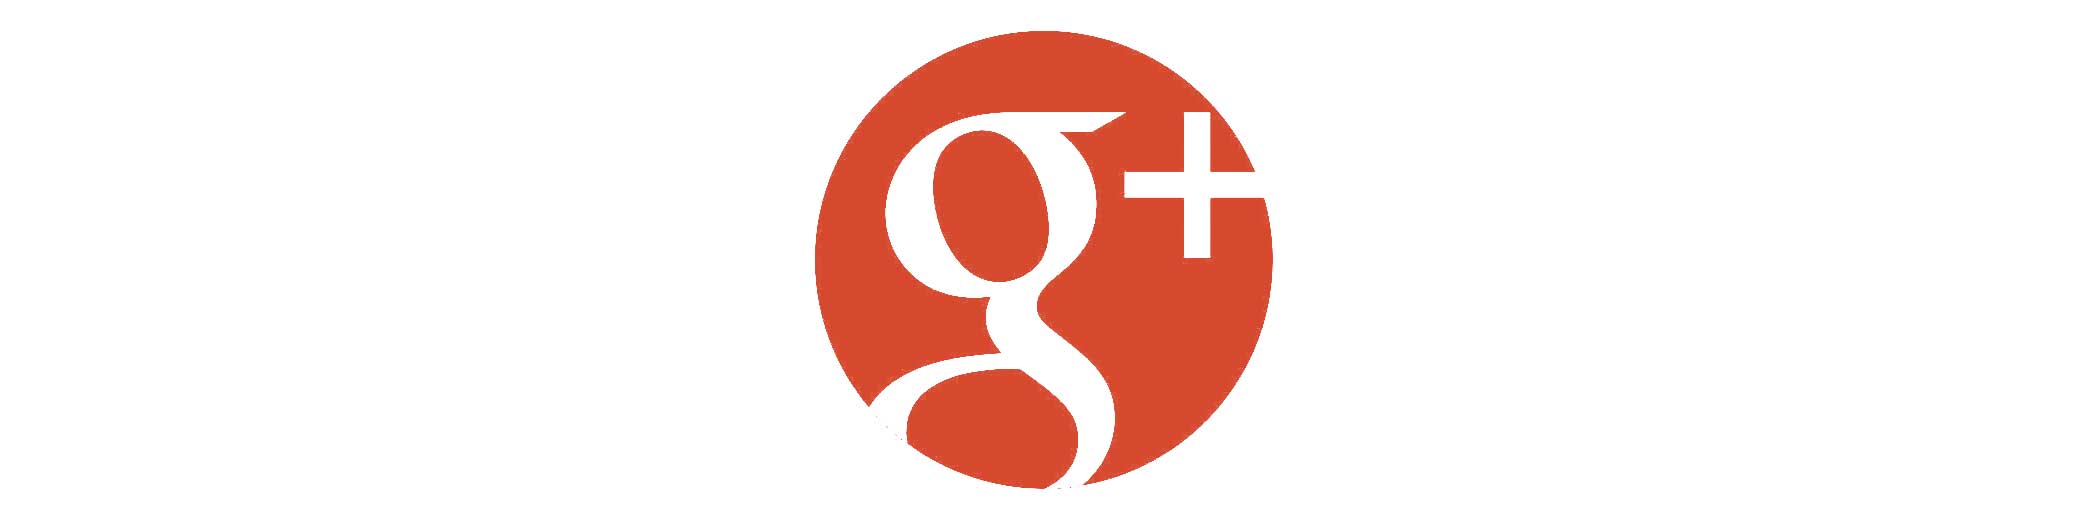  Google+      2  2019!